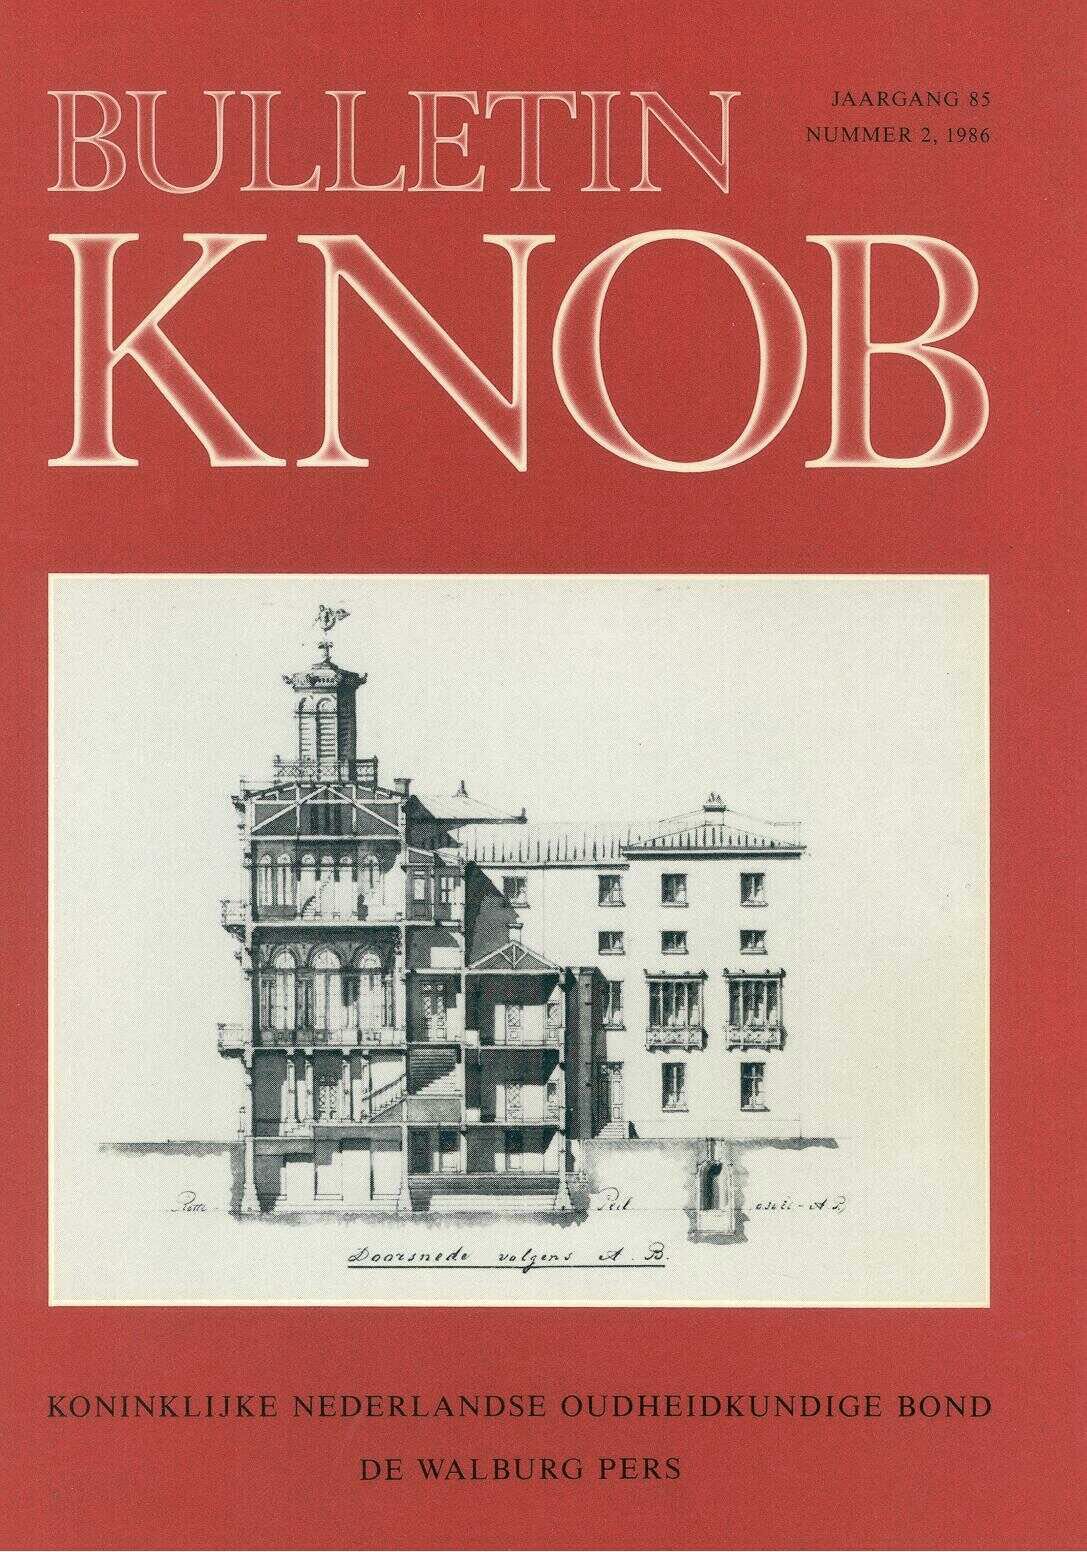 						Toon Bulletin KNOB 85 (1986) 2
					